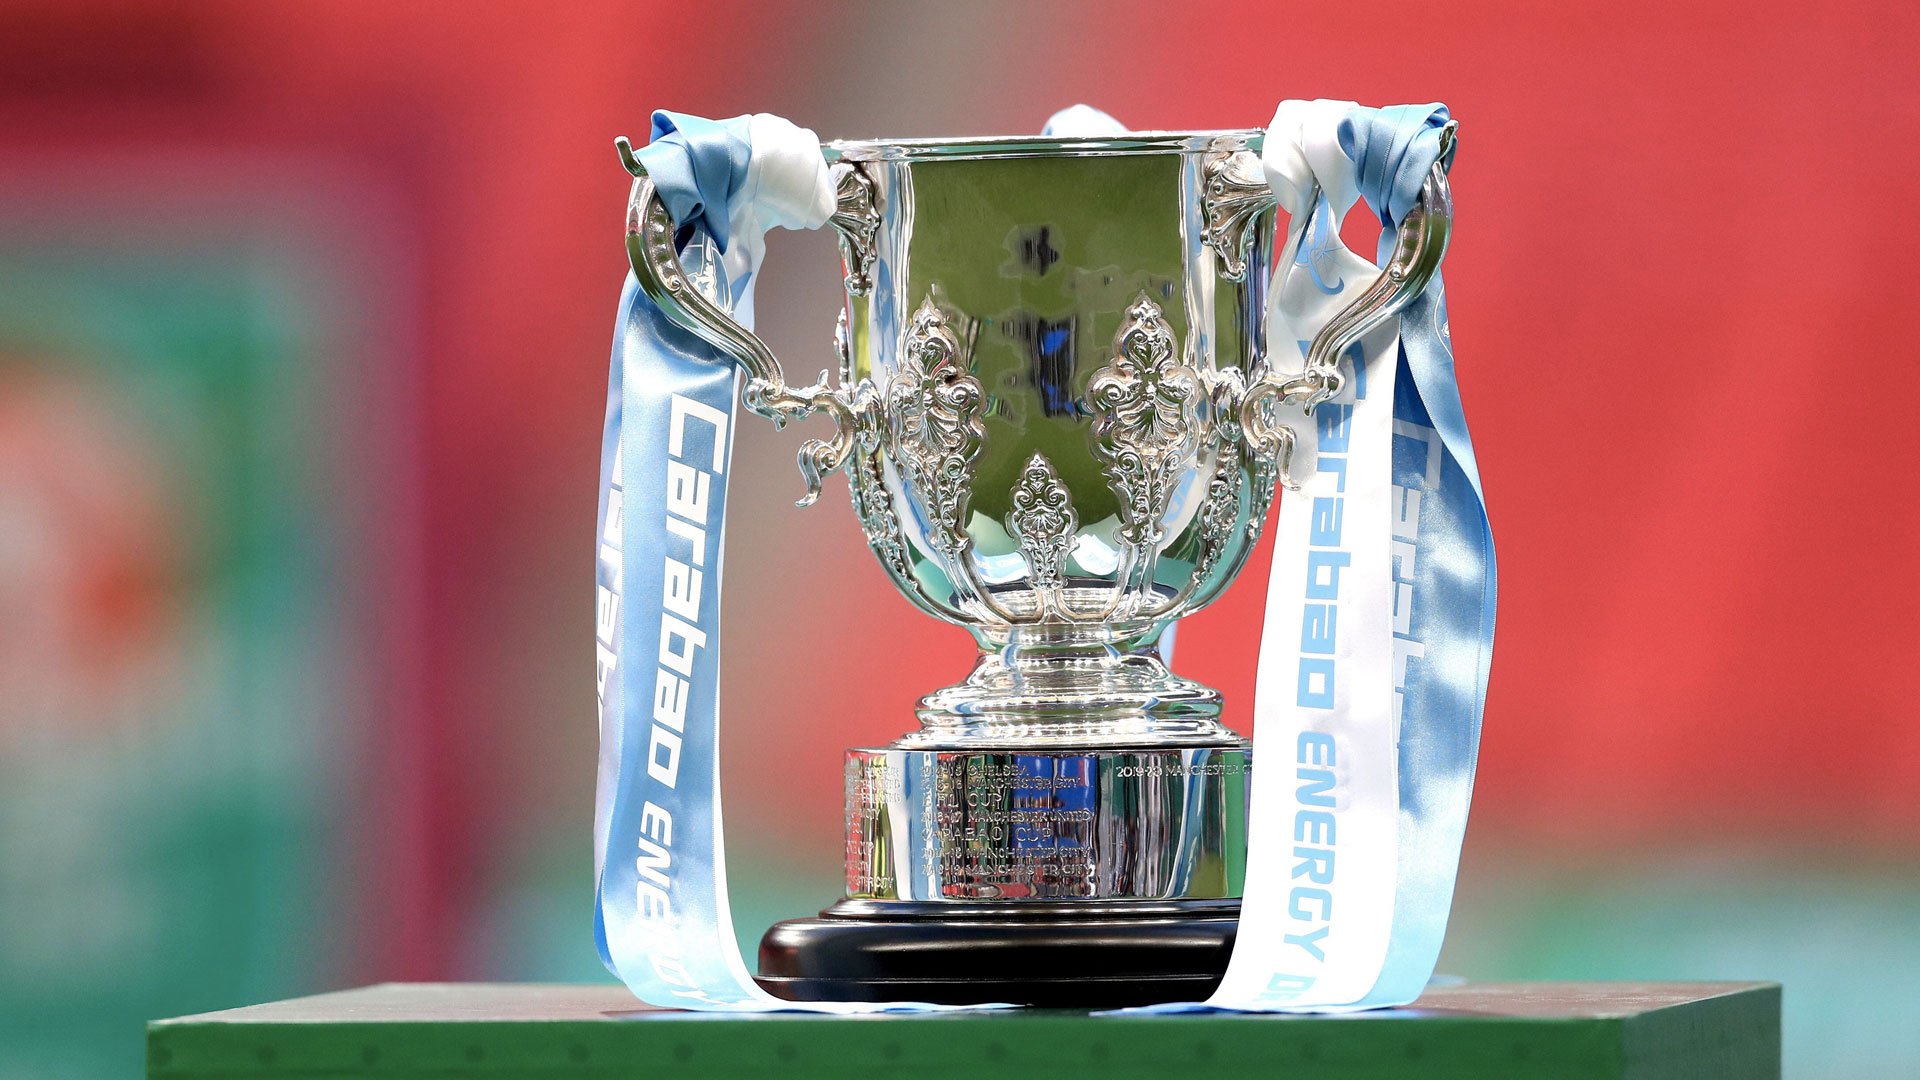 The Carabao Cup on display at Wembley Stadium...